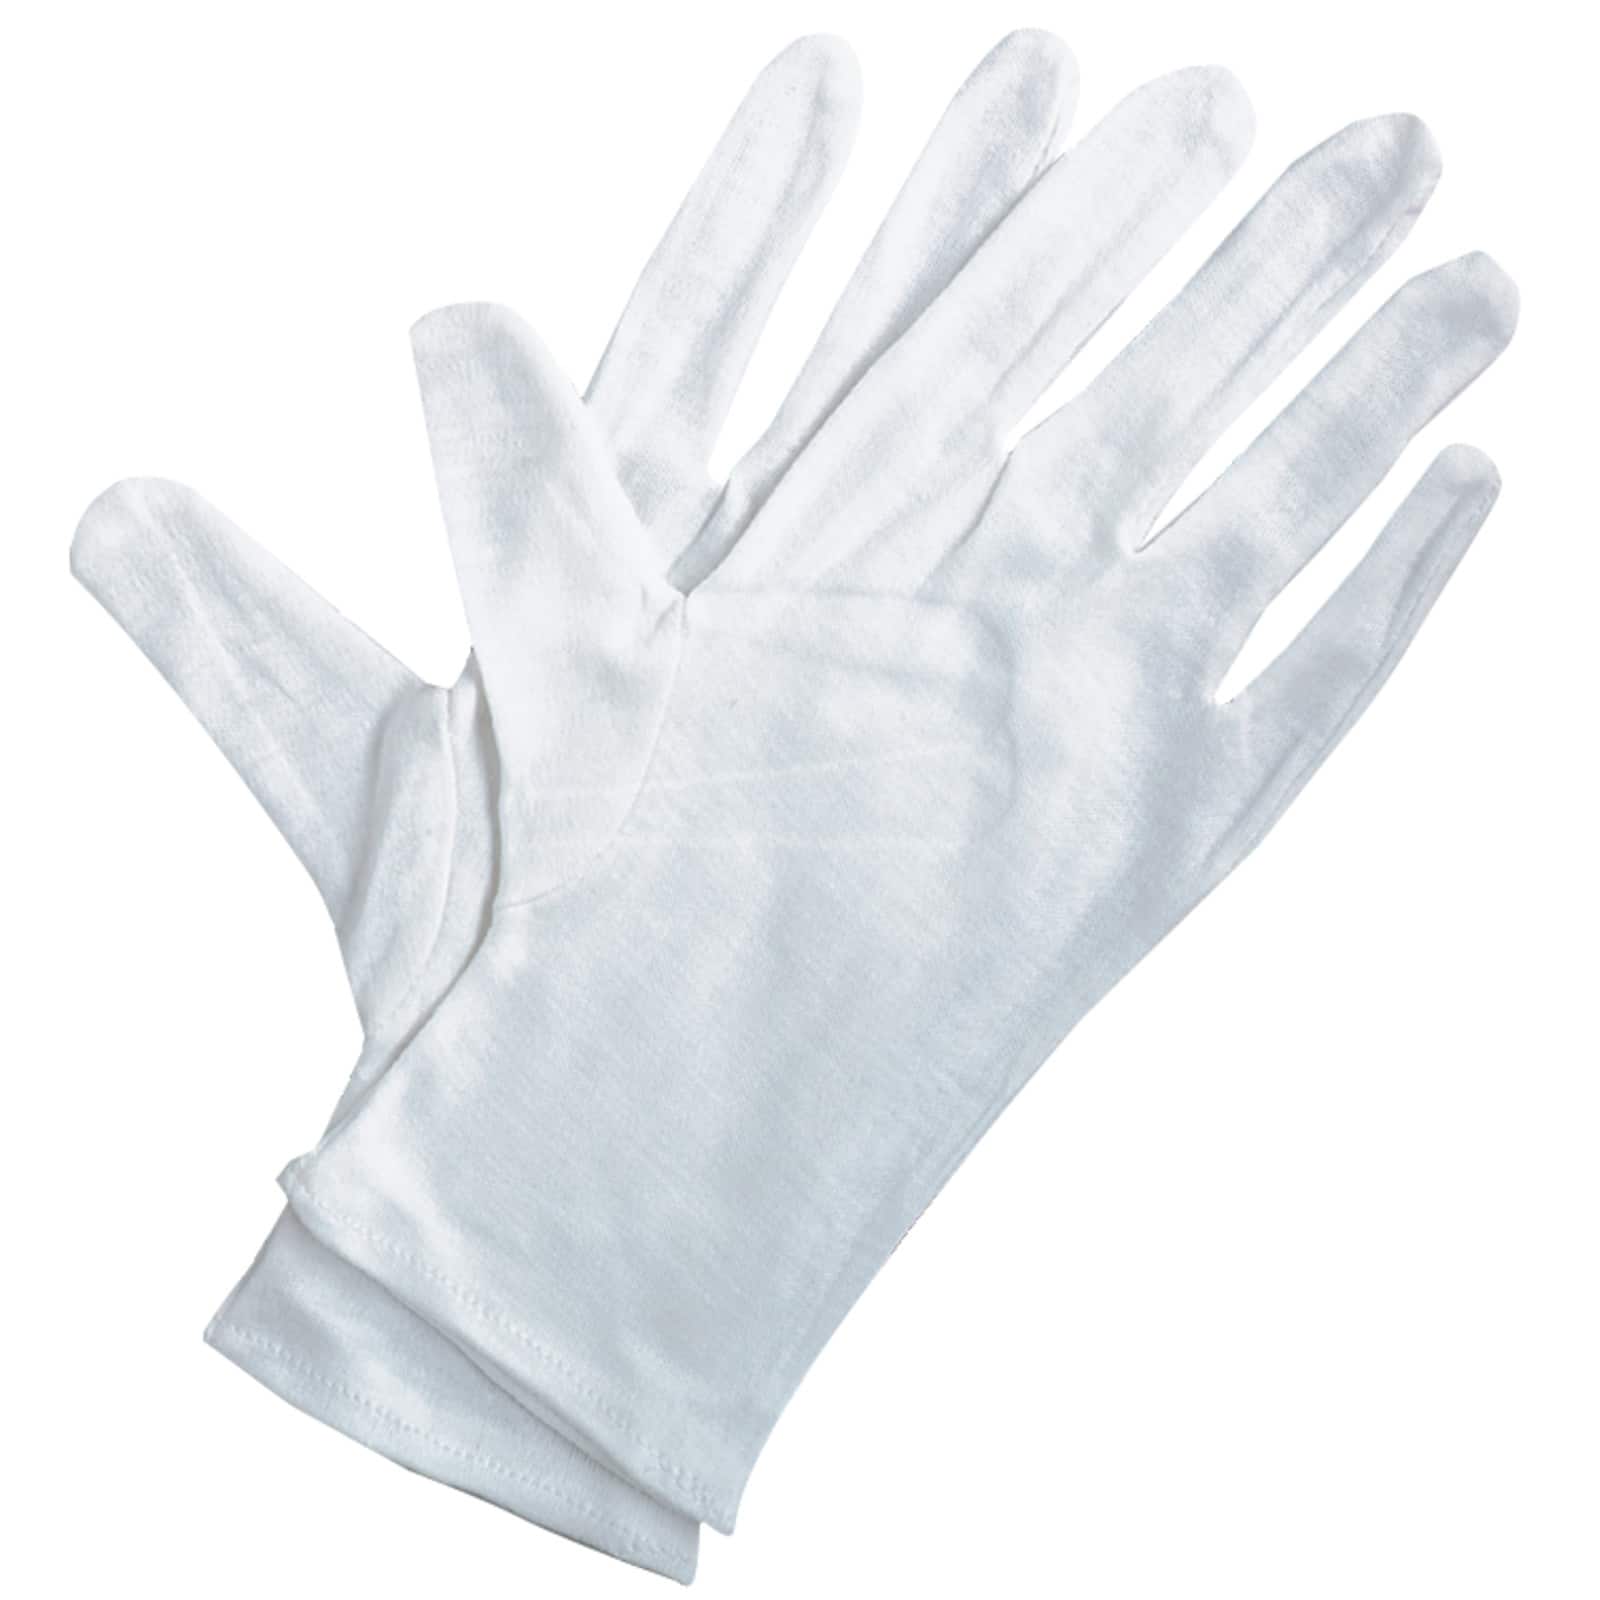 Art Alternatives Soft White Cotton Gloves